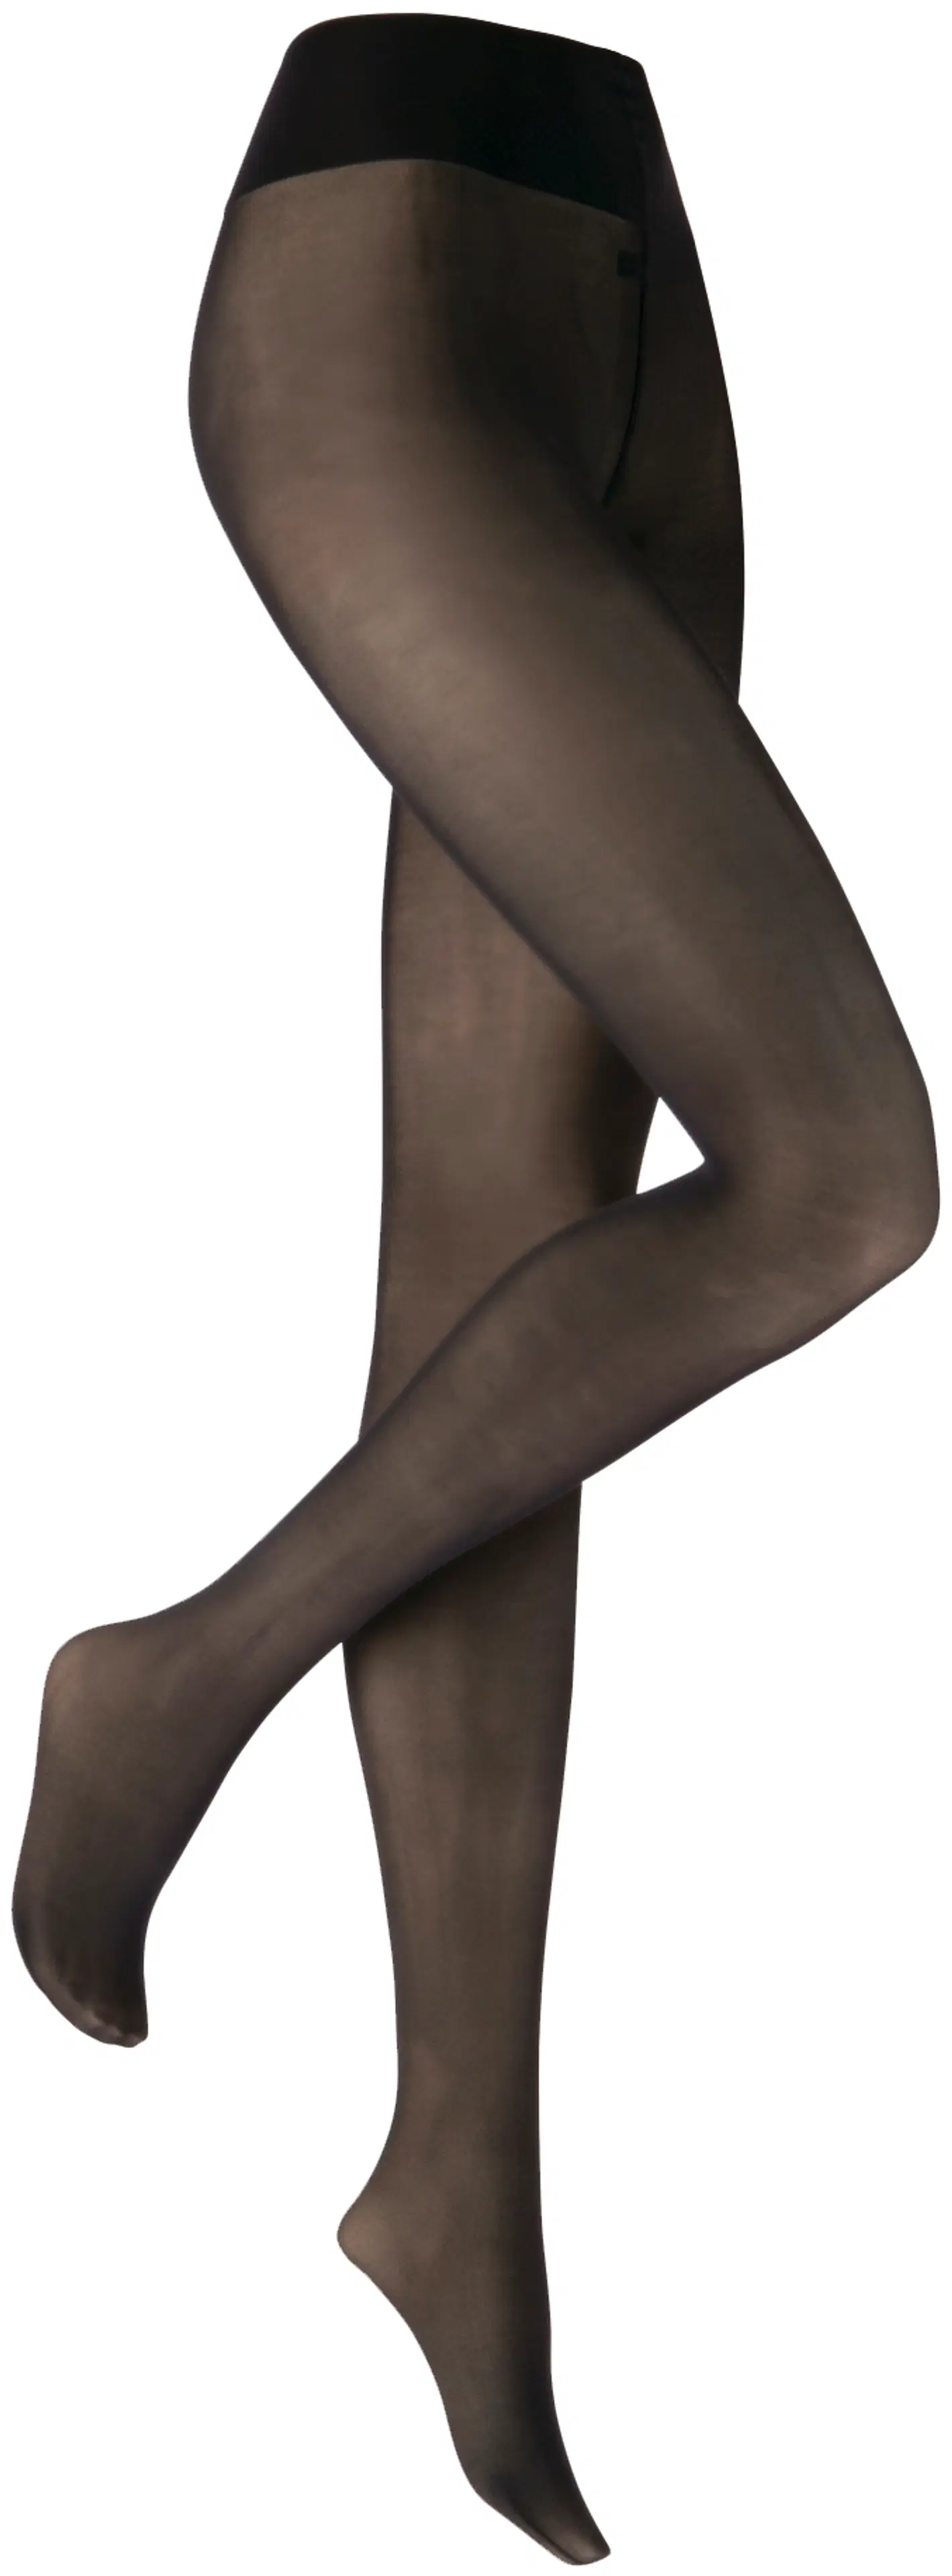 Vogue sukkahousut Conscious Opaque 40den musta